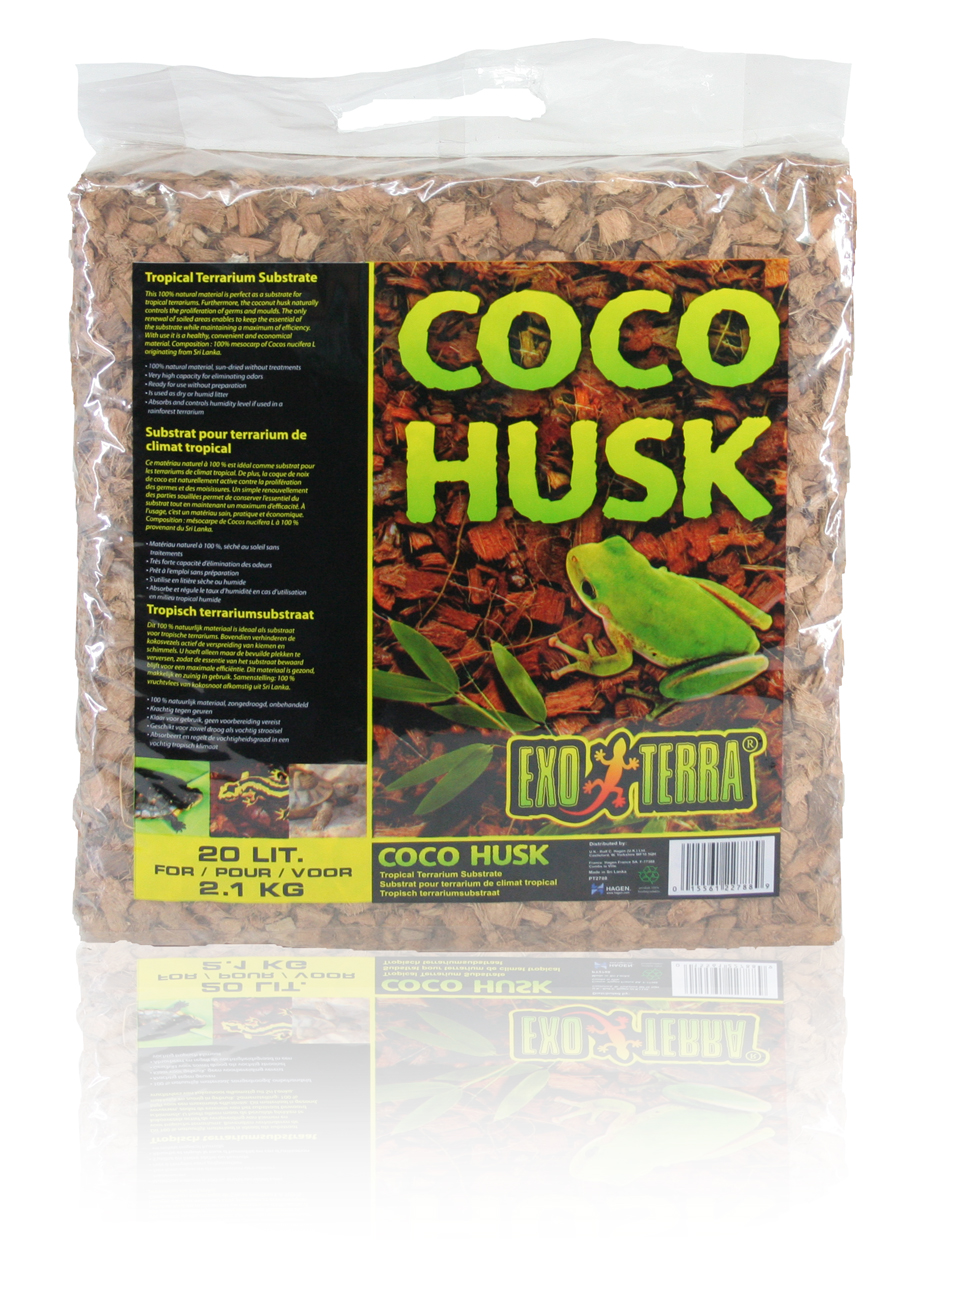 Ex substrat coco husk - <Product shot>